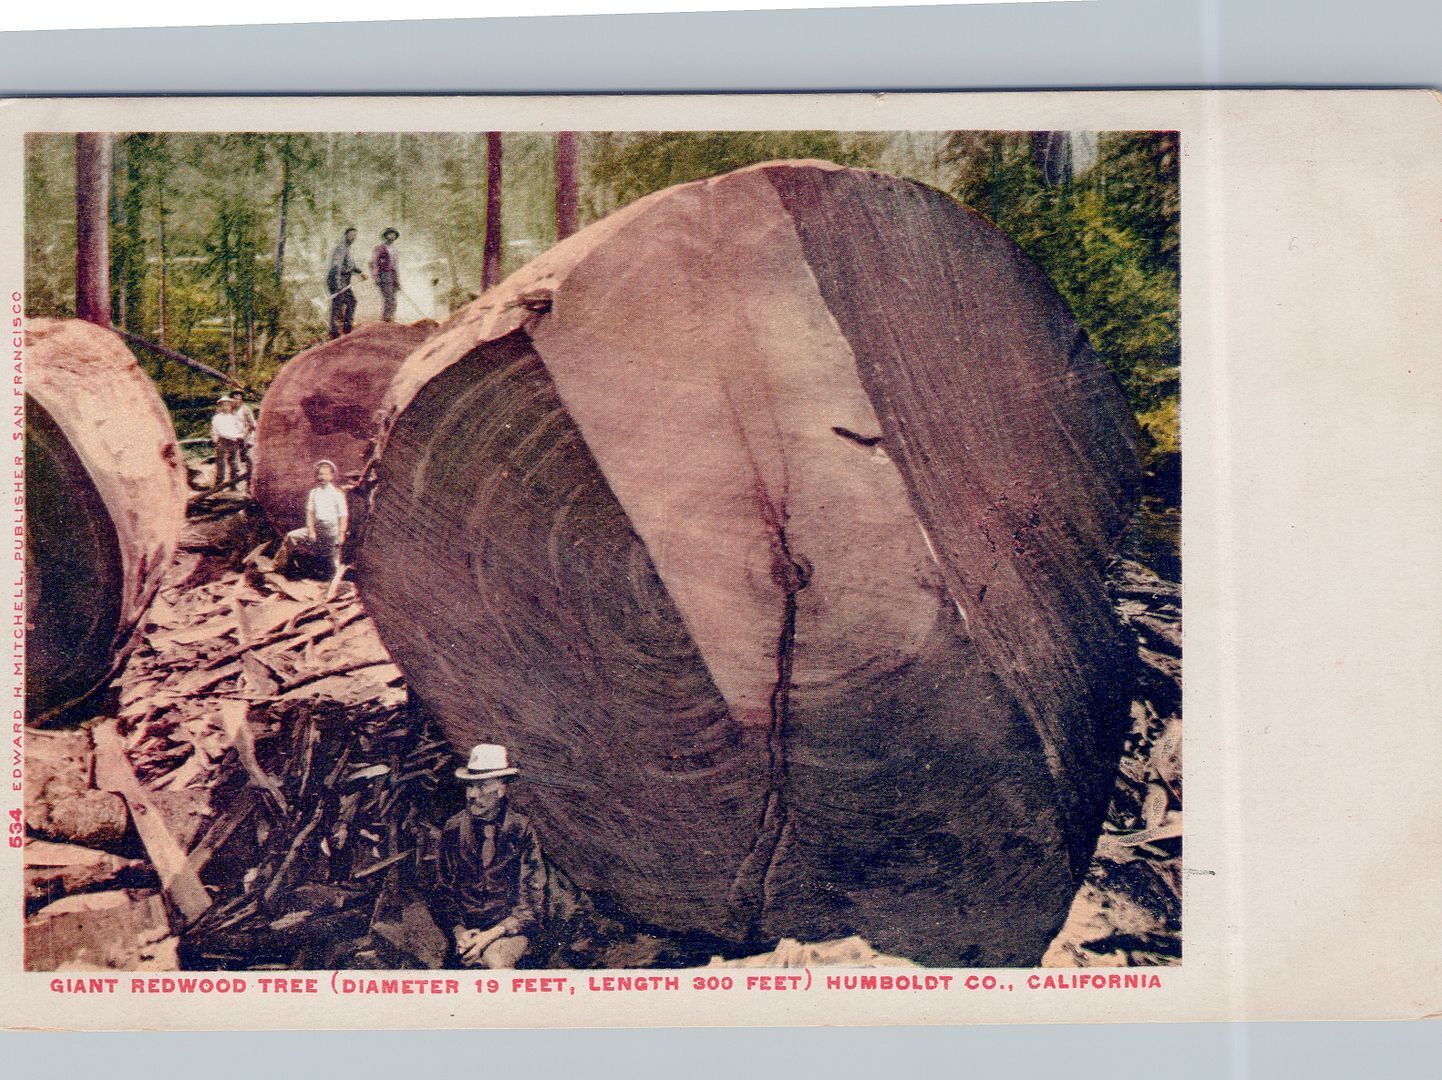 CALIFORNIA CA - Giant 19 Foot Diameter Redwood Tree Humboldt Co. Postcard - udb